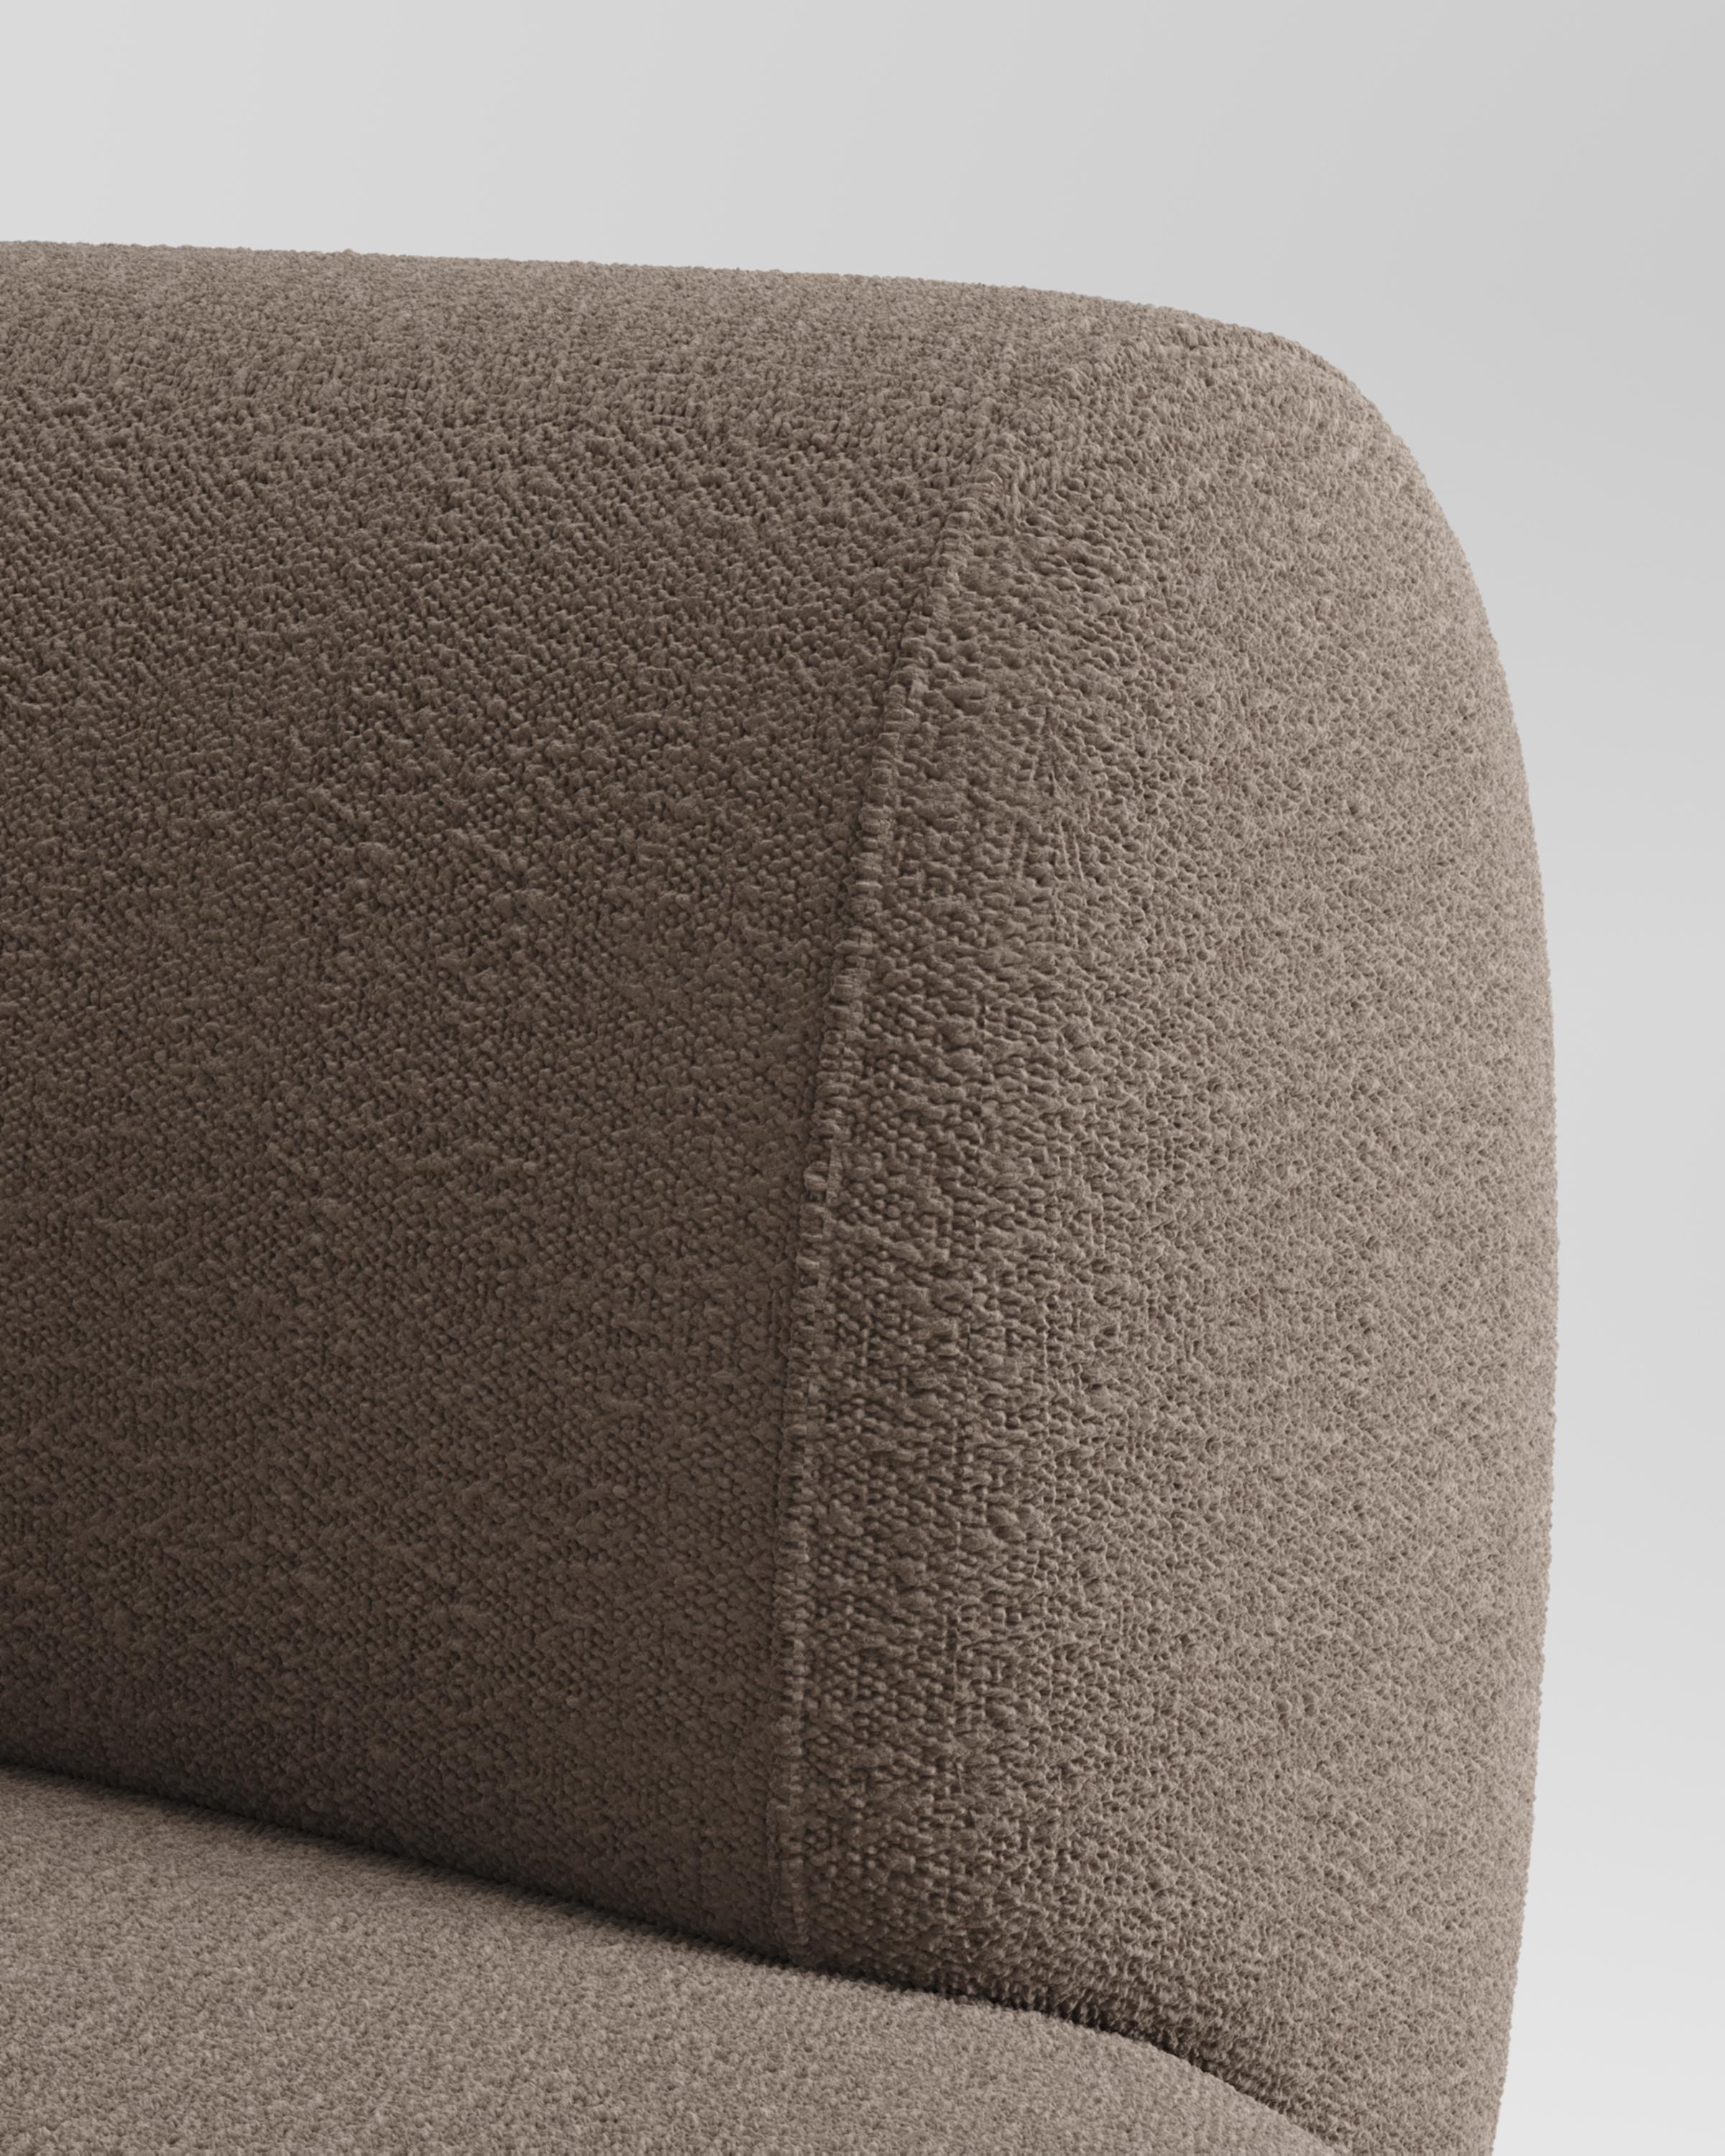 Collector Hug Sofa Designed by Ferrianisbolgi Fabric Bouclé Brown In New Condition For Sale In Castelo da Maia, PT